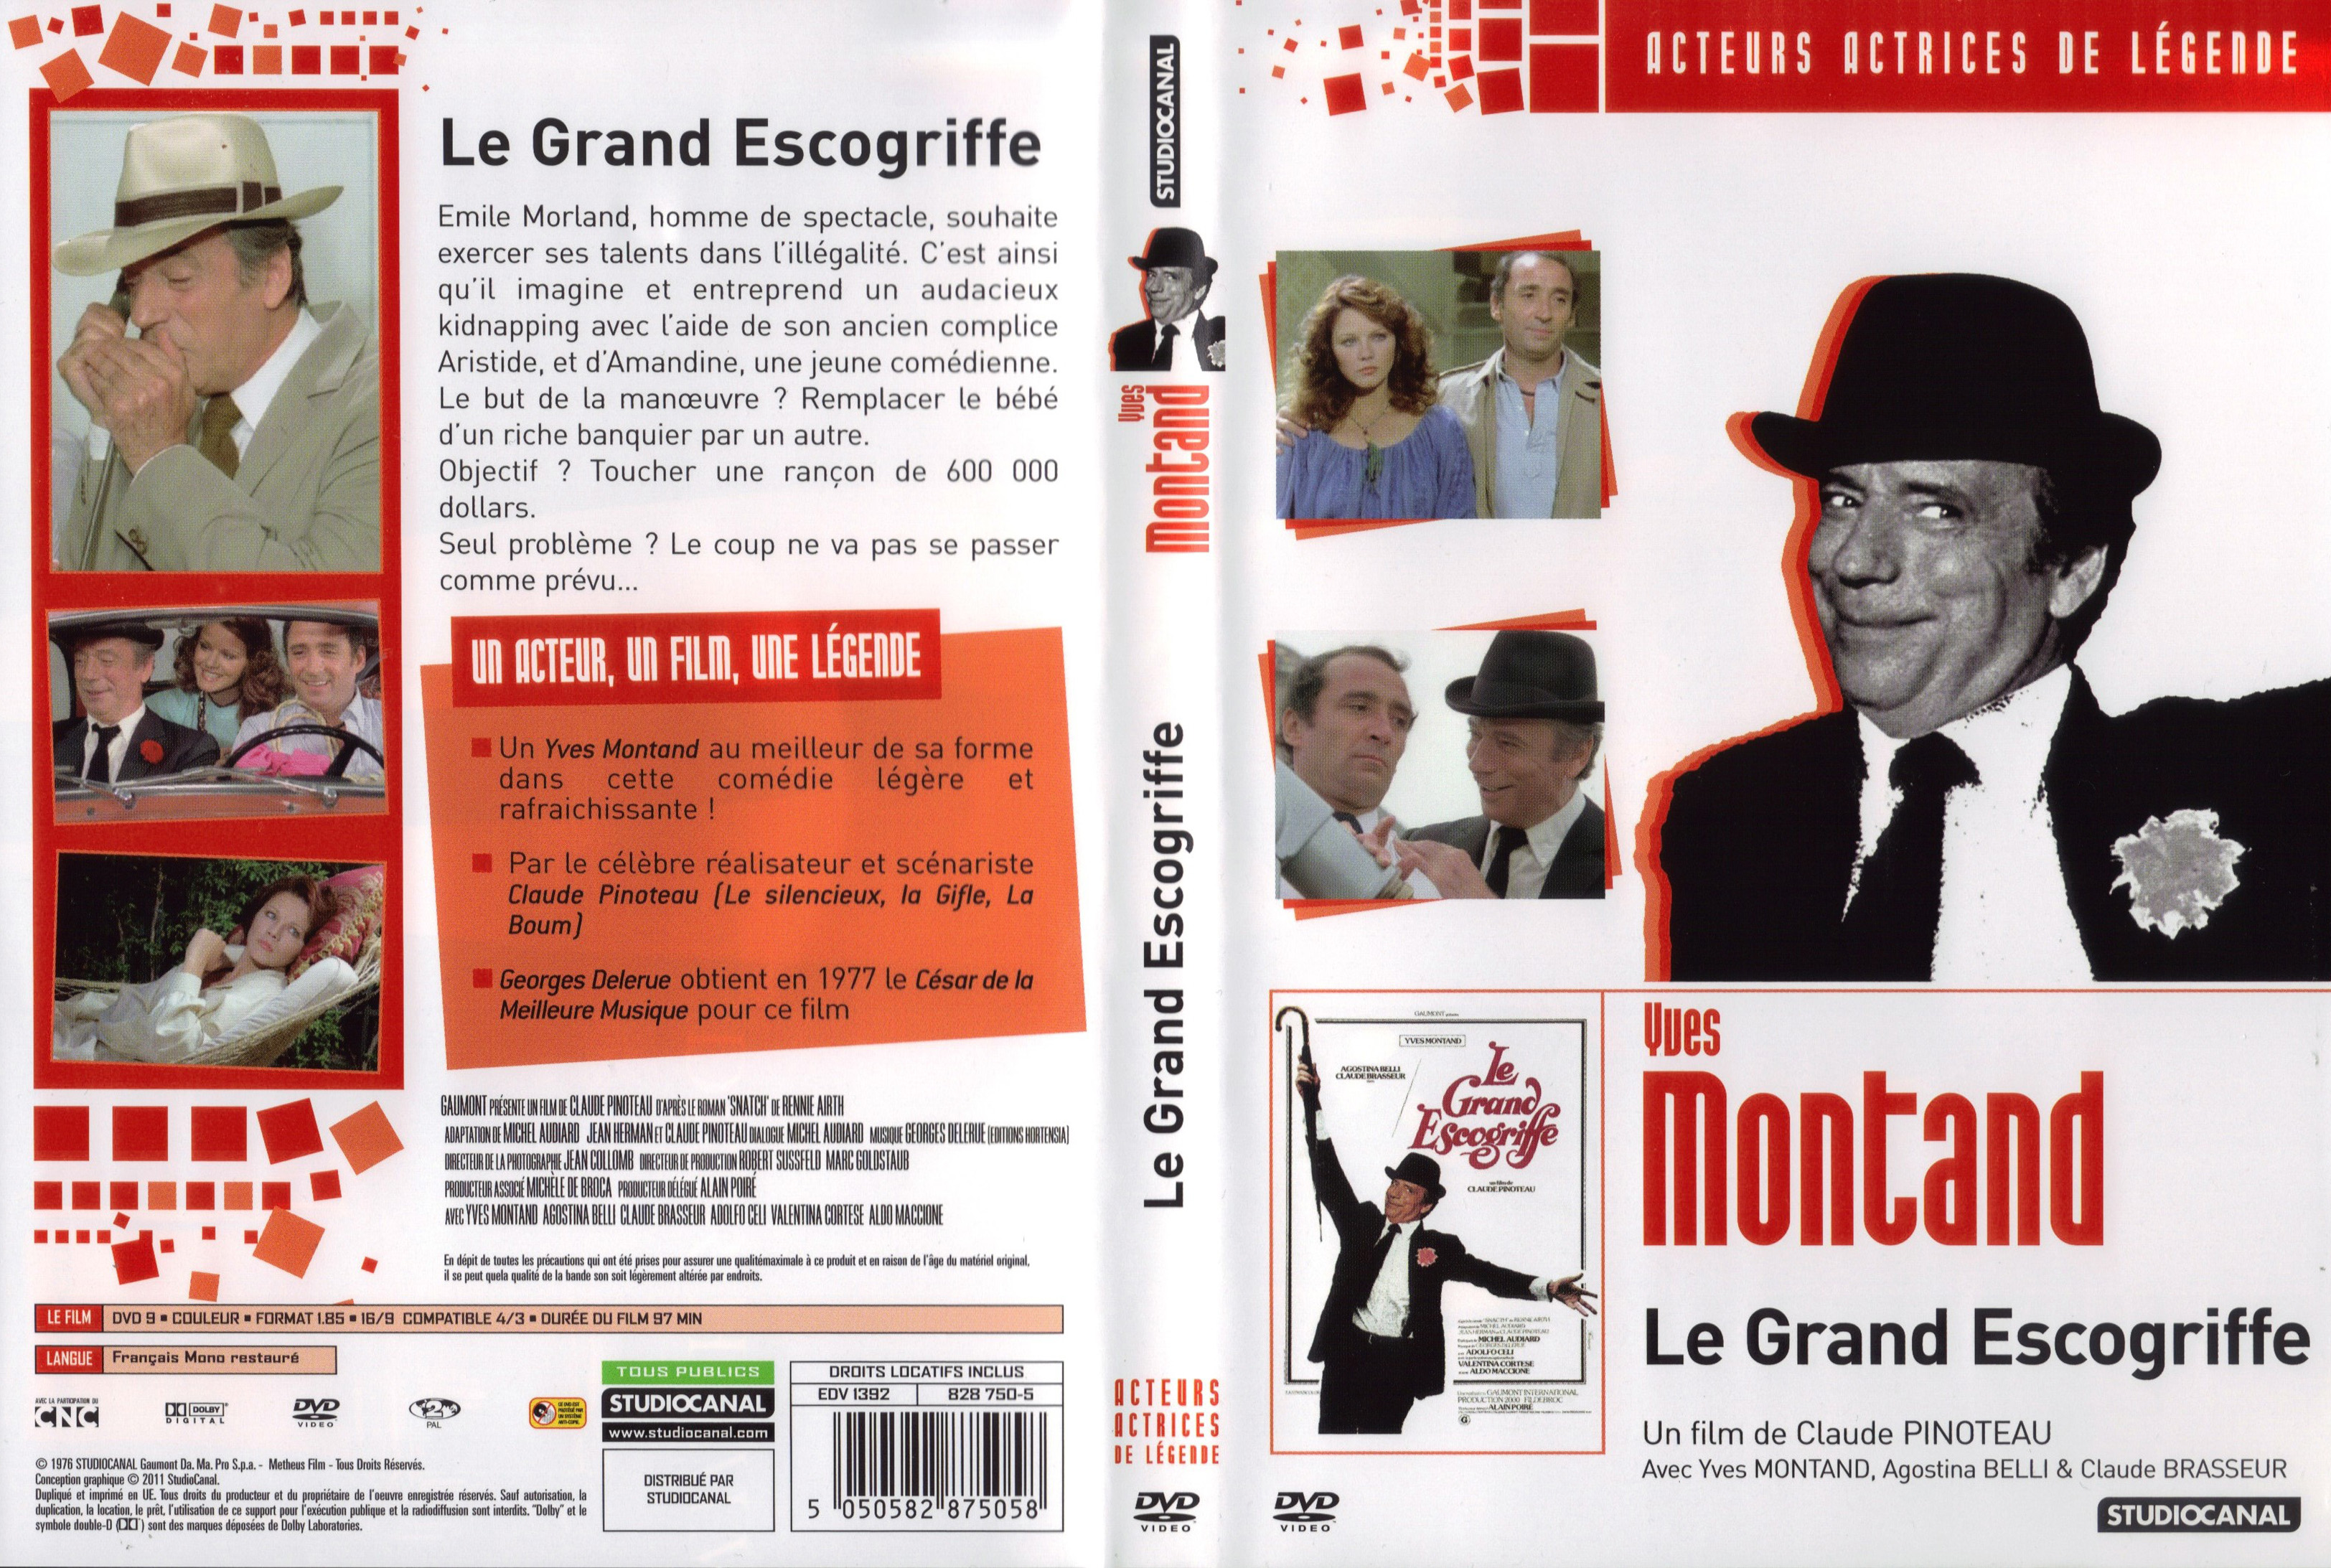 Jaquette DVD Le grand escogriffe v2